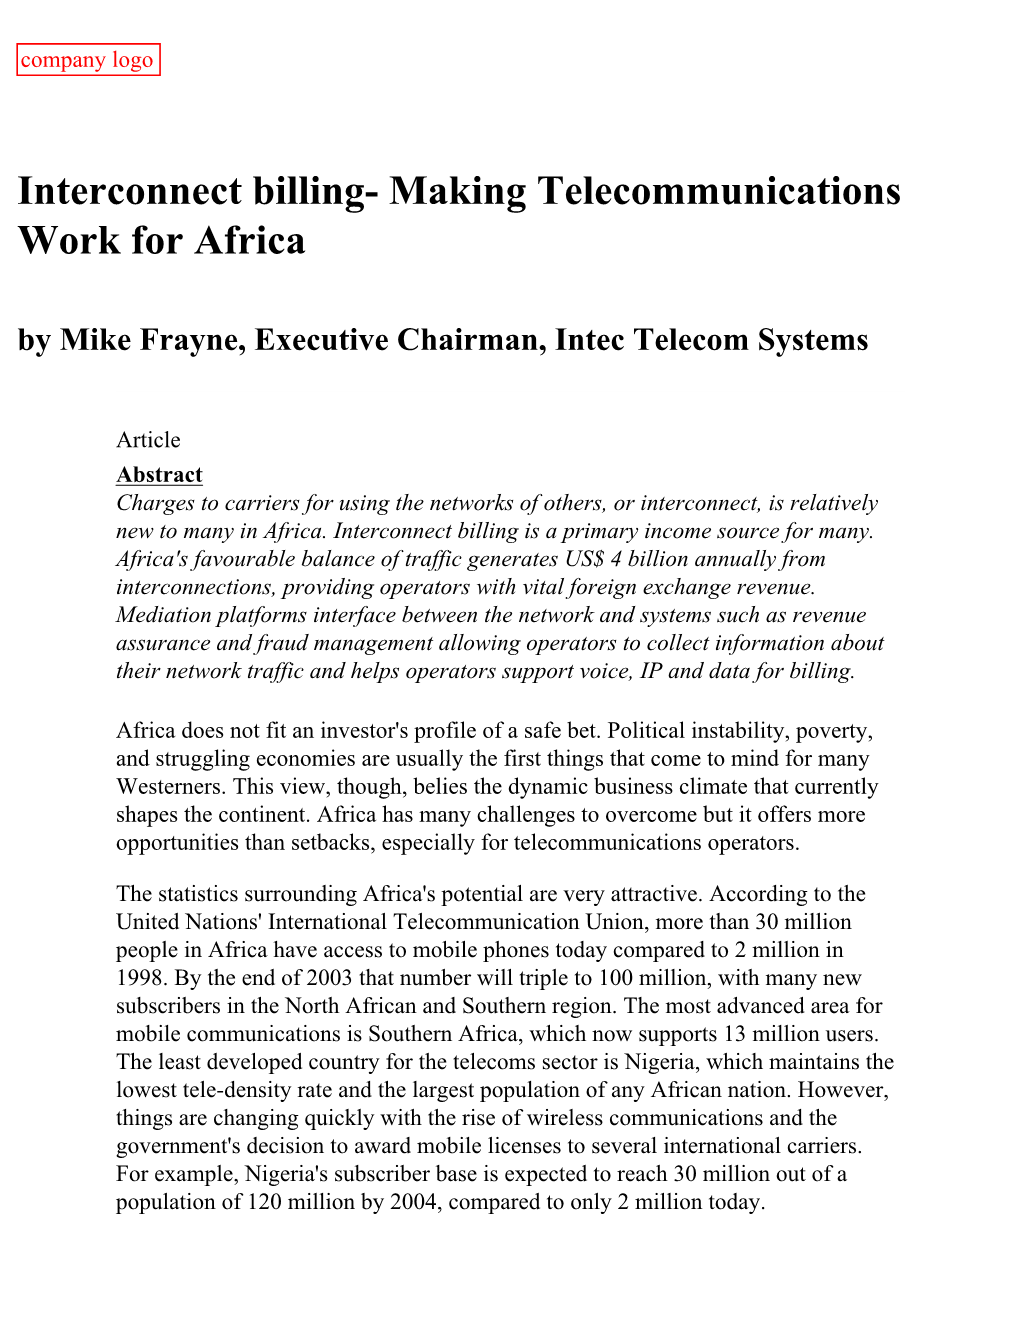 Mike Frayne, Executive Chairman, Intec Telecom Systems